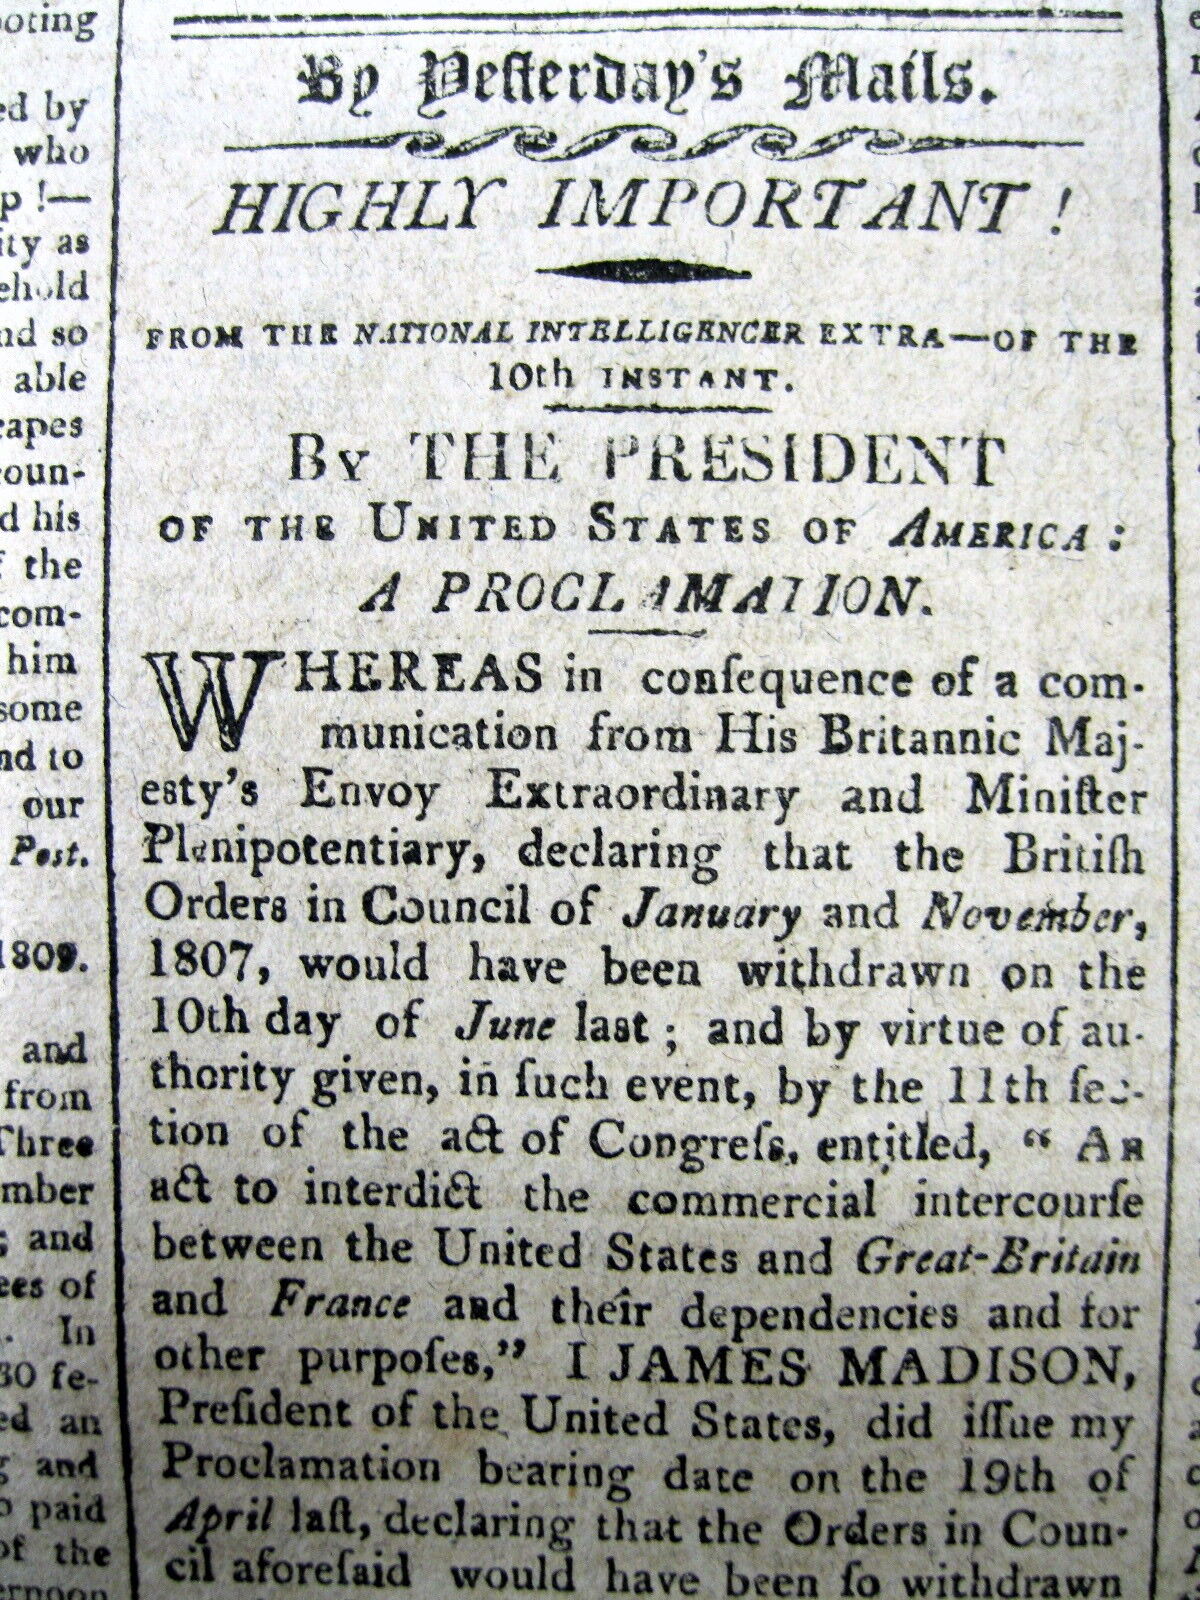 1809 hdlne newspaper JAMES MADISON PROCLAMATION - US EMBARGO on TRADE w BRITISH